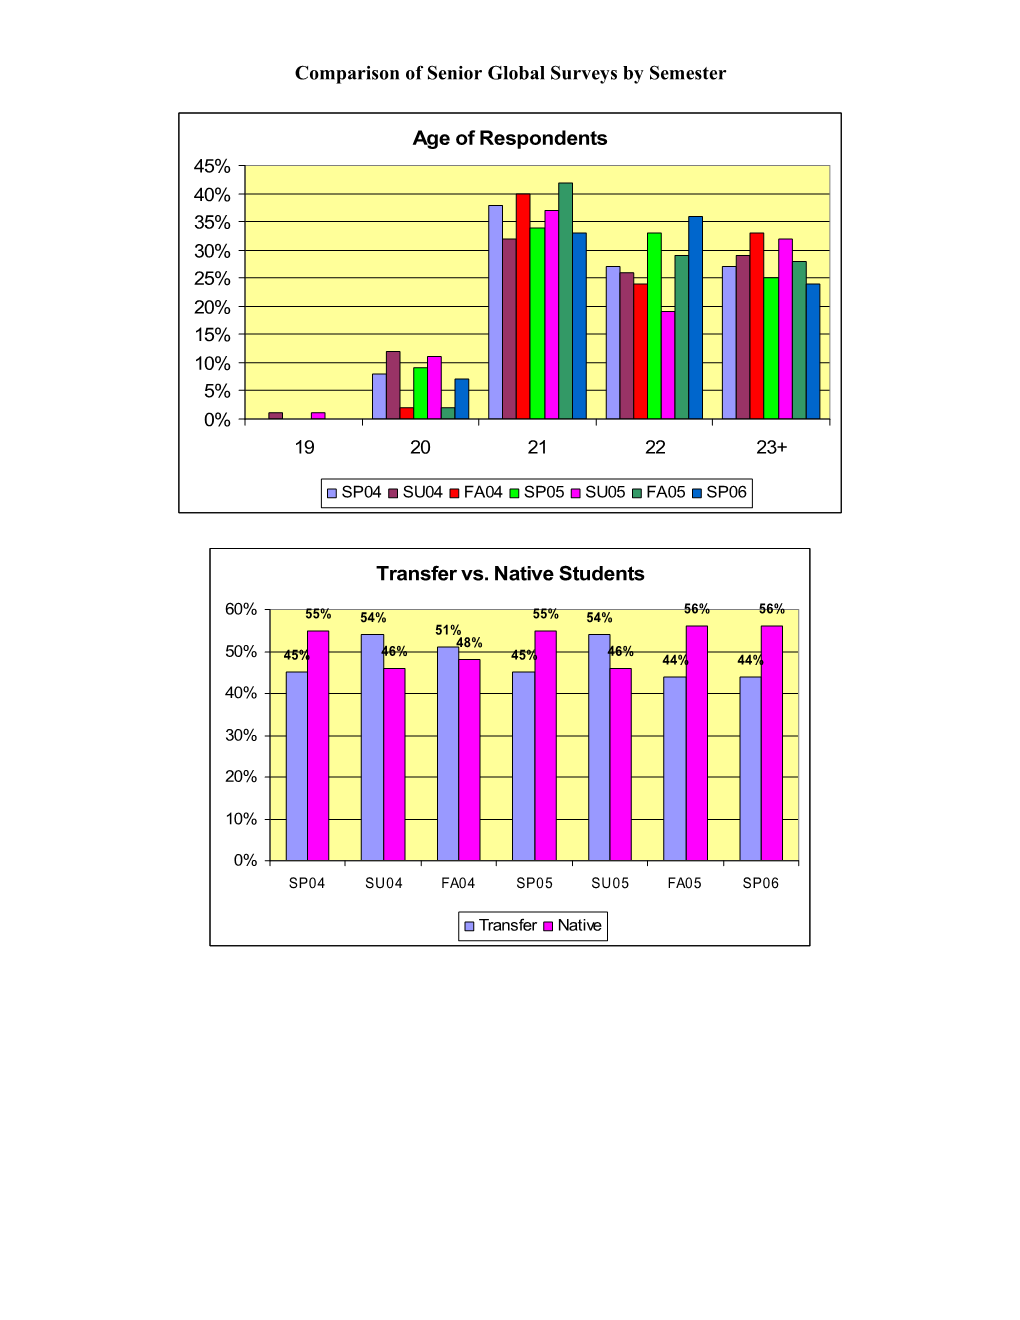 Comparison of 2004 Freshman and Senior Global Surveys